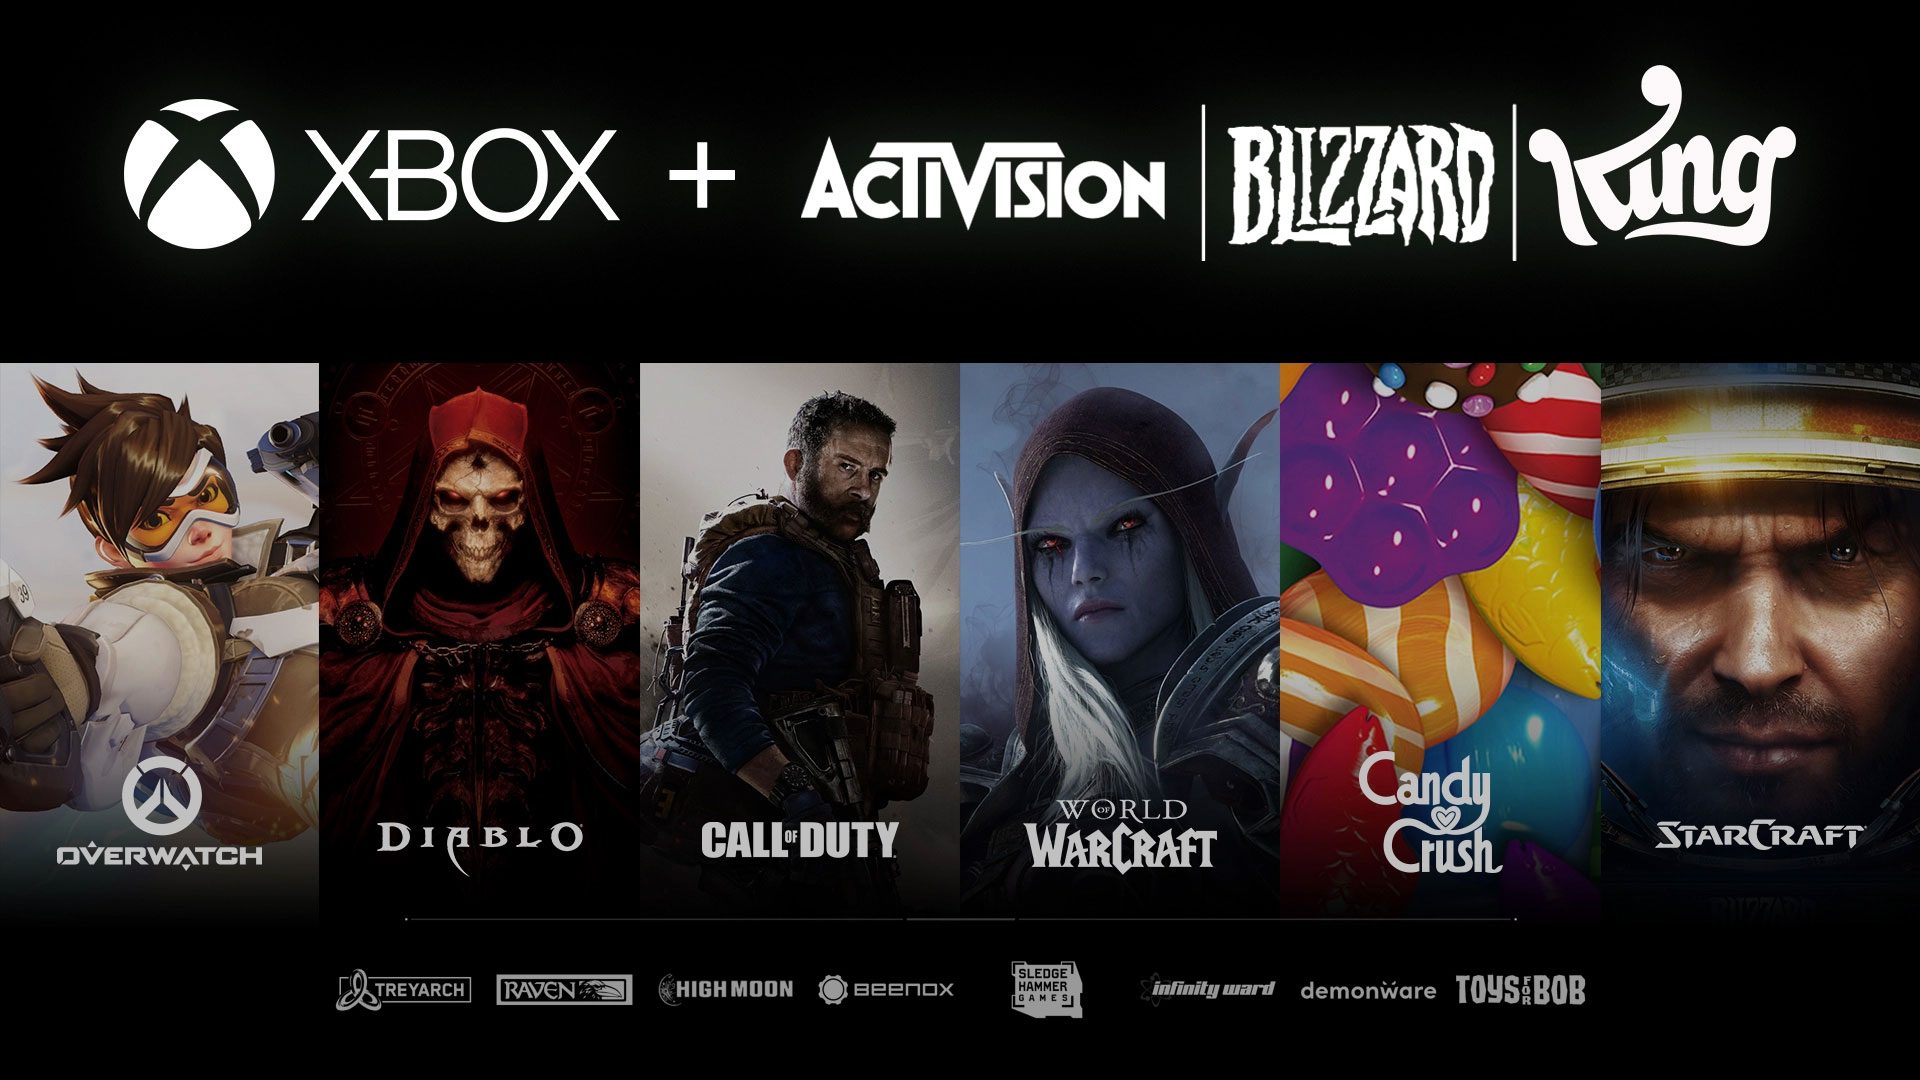 UK’s CMA investigating Microsoft’s acquisition of Activision Blizzard